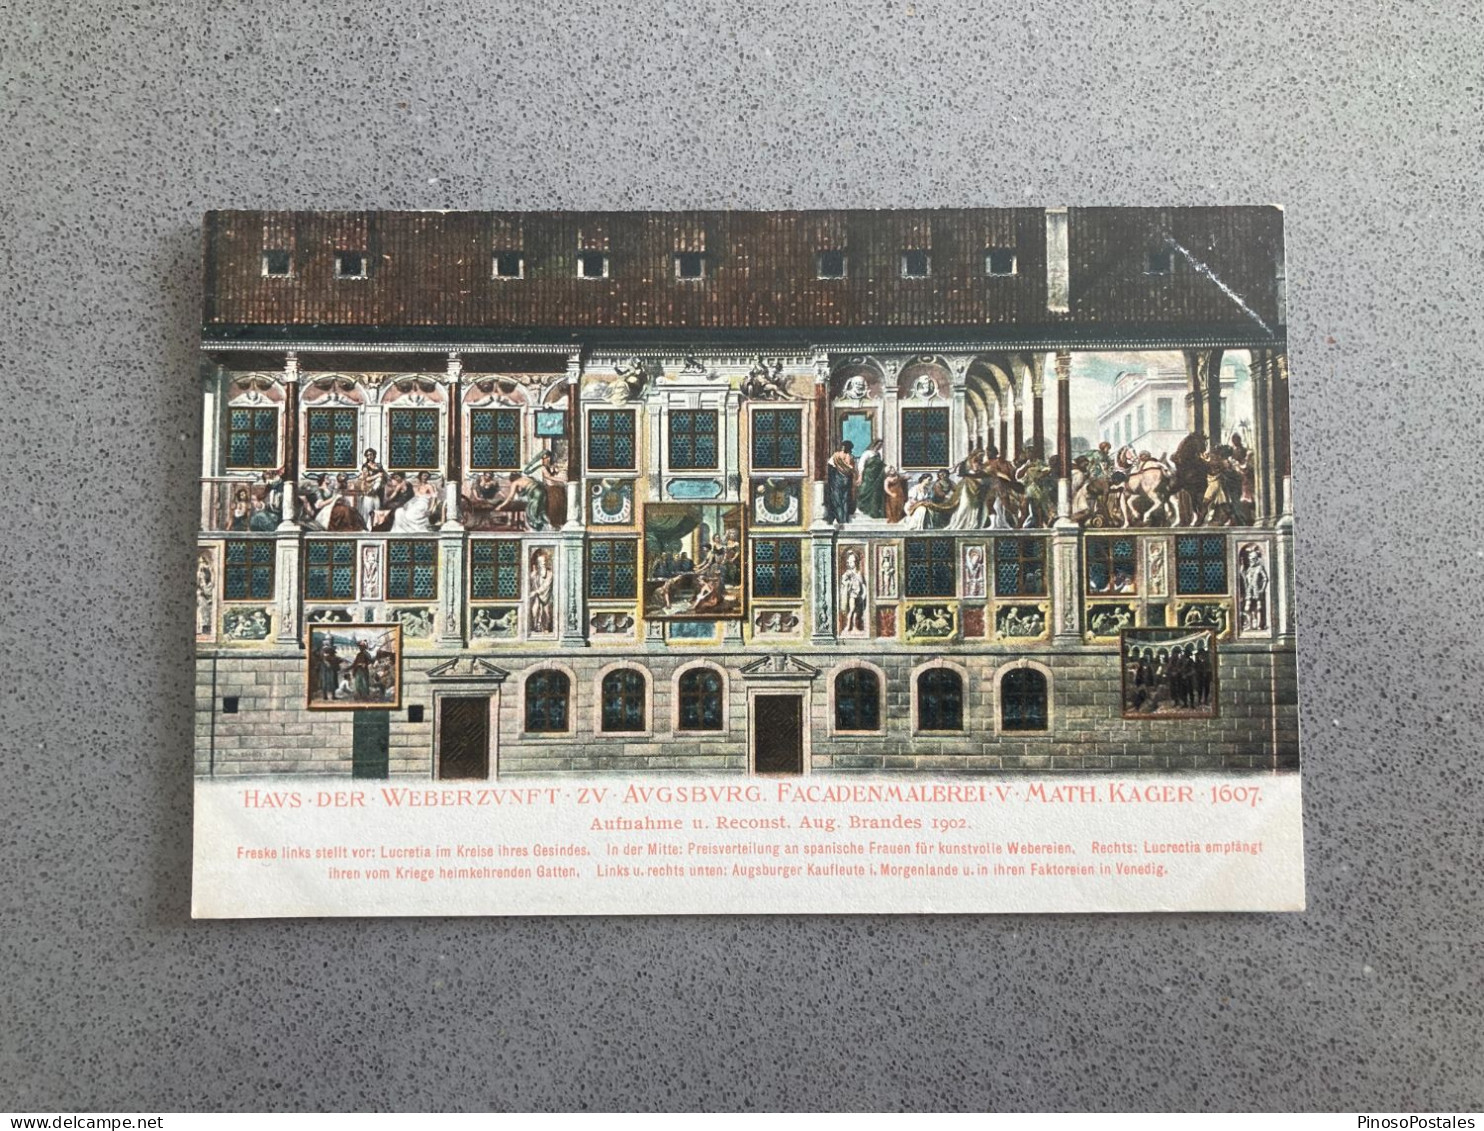 Haus Der Weberzunft Zu Augsburg Facadenmalbrei V Math Kager Carte Postale Postcard - Malerei & Gemälde